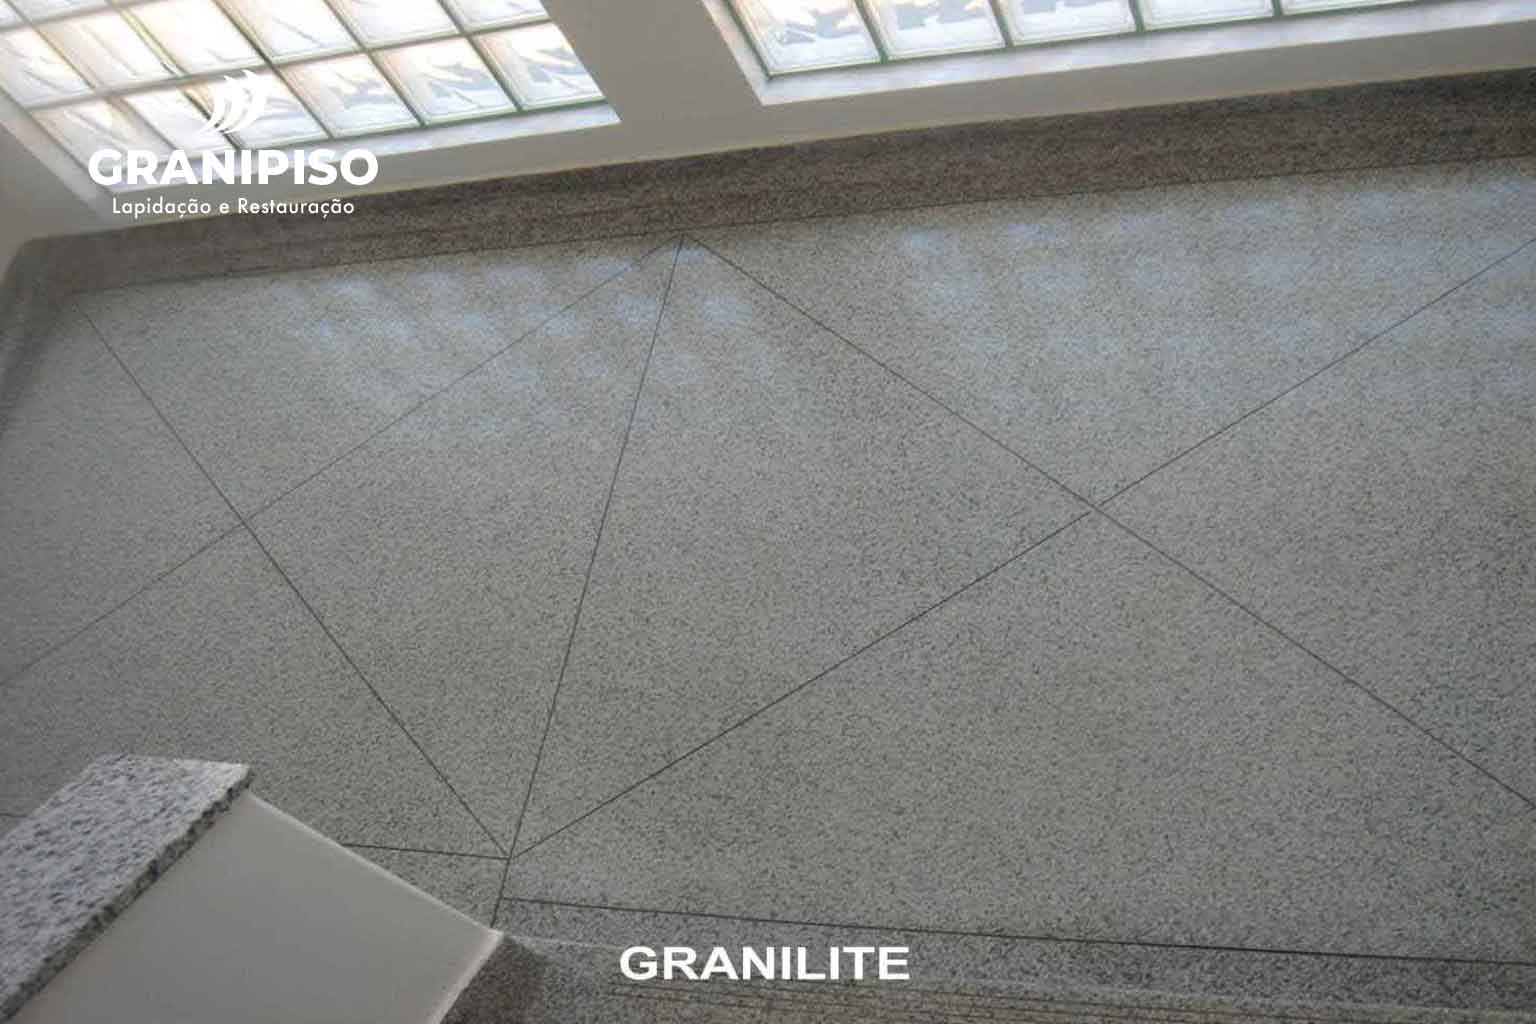 piso-granilite-hospital-baependi-granipiso-04